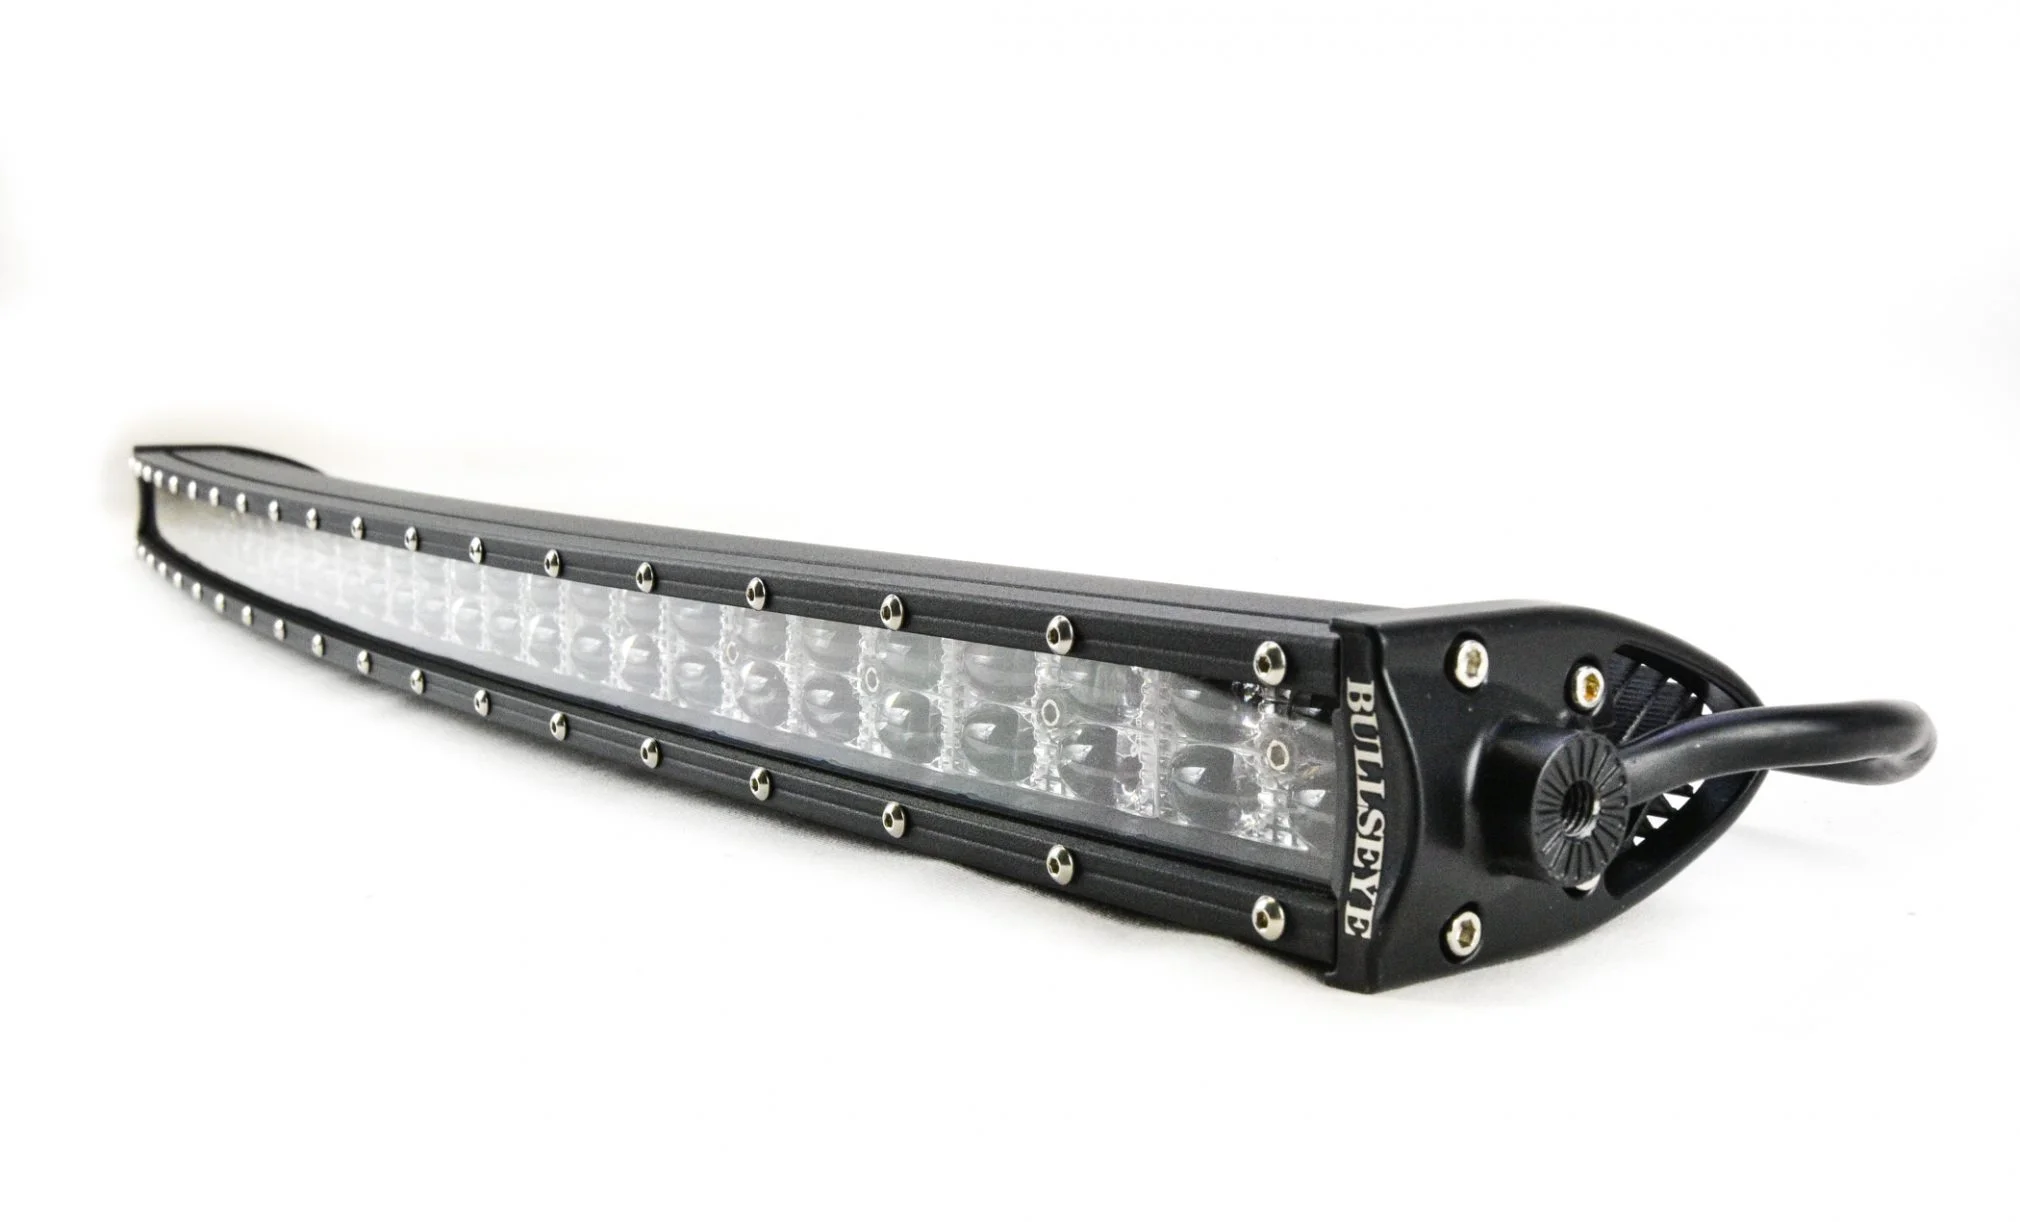 32 curved led light bar